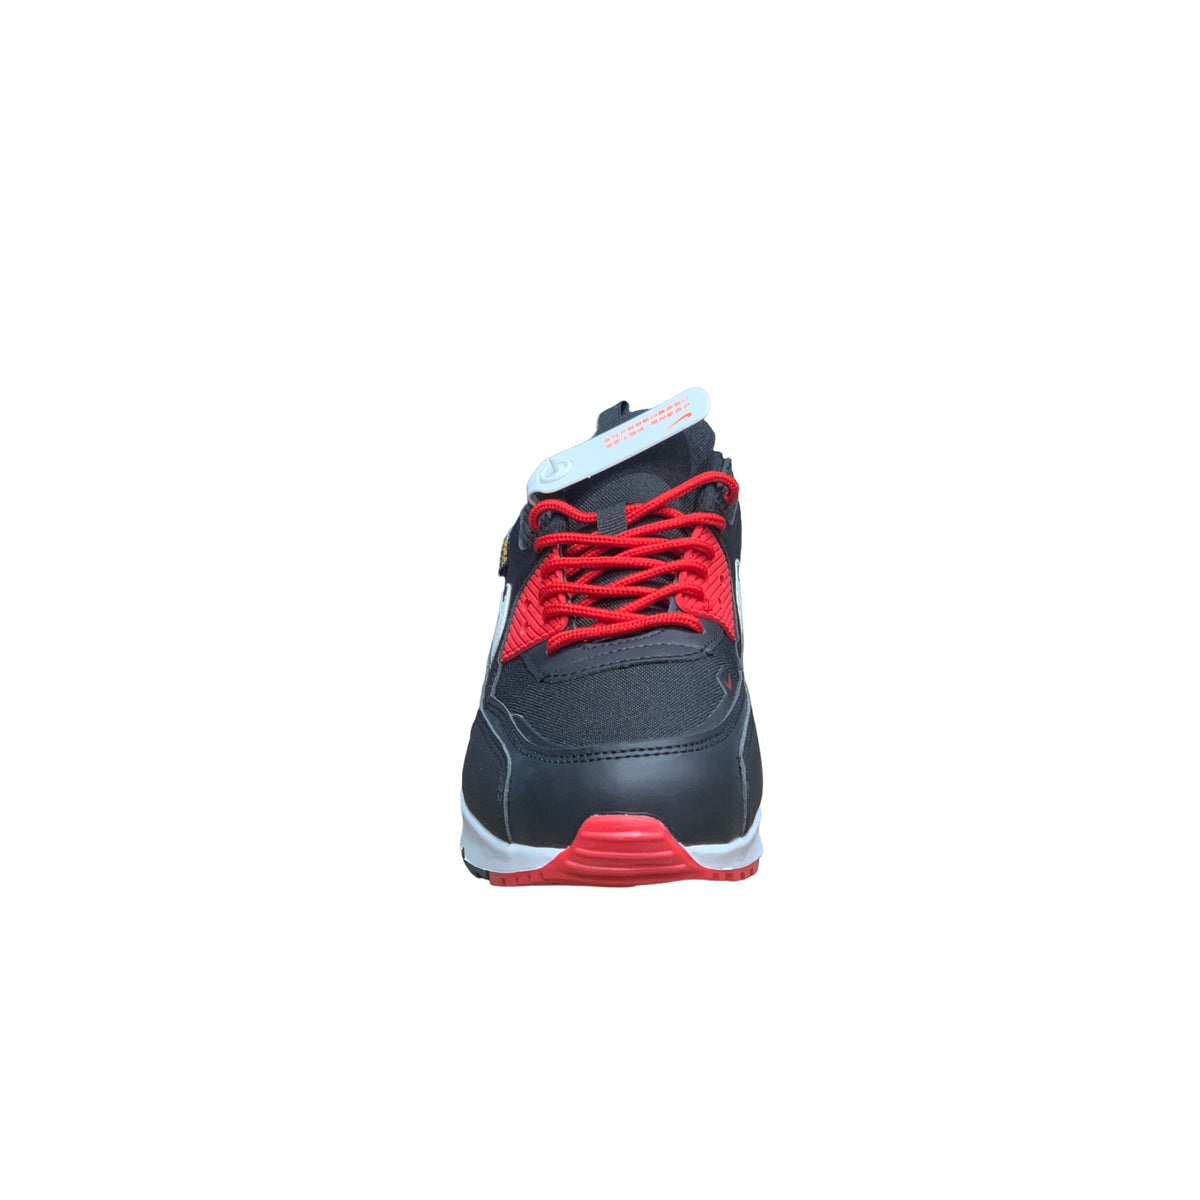 Nike Airmax 90 Premium Black Red